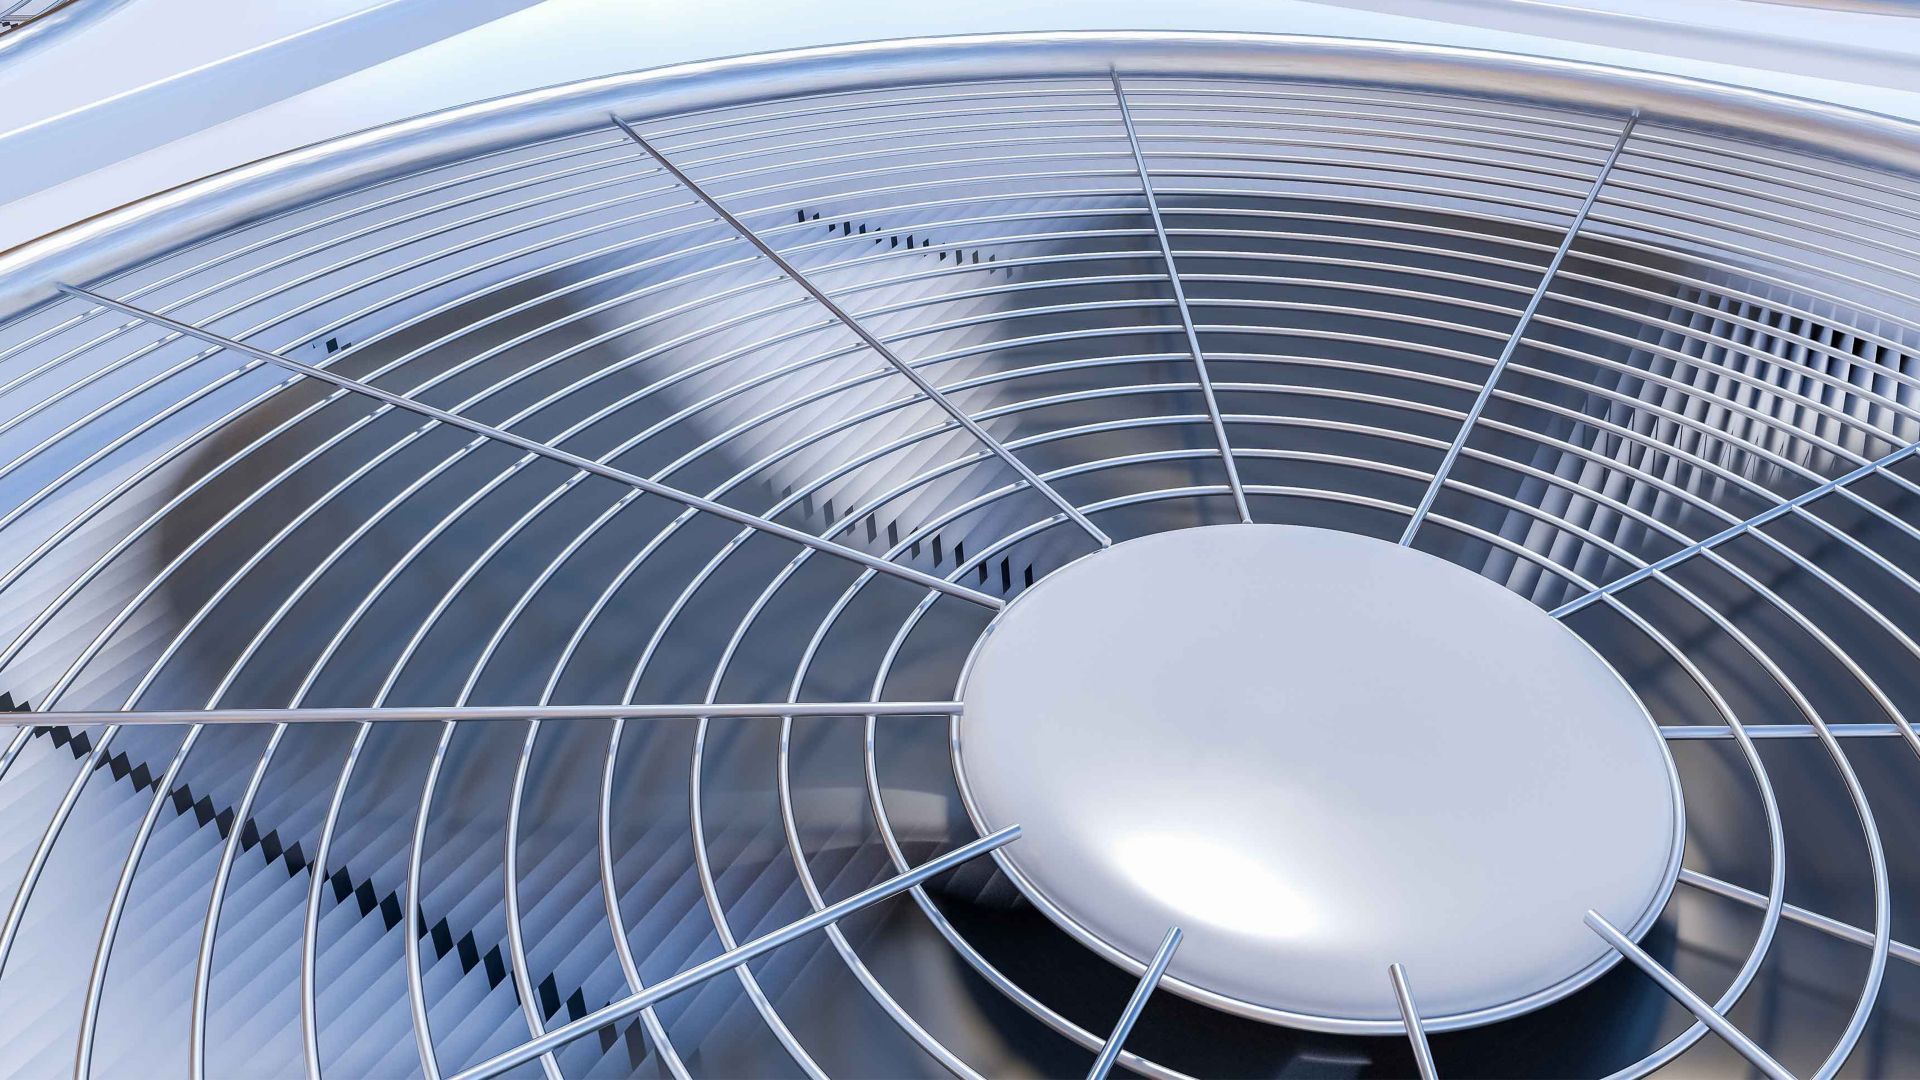 lose-up of HVAC unit; air conditioning unit blades